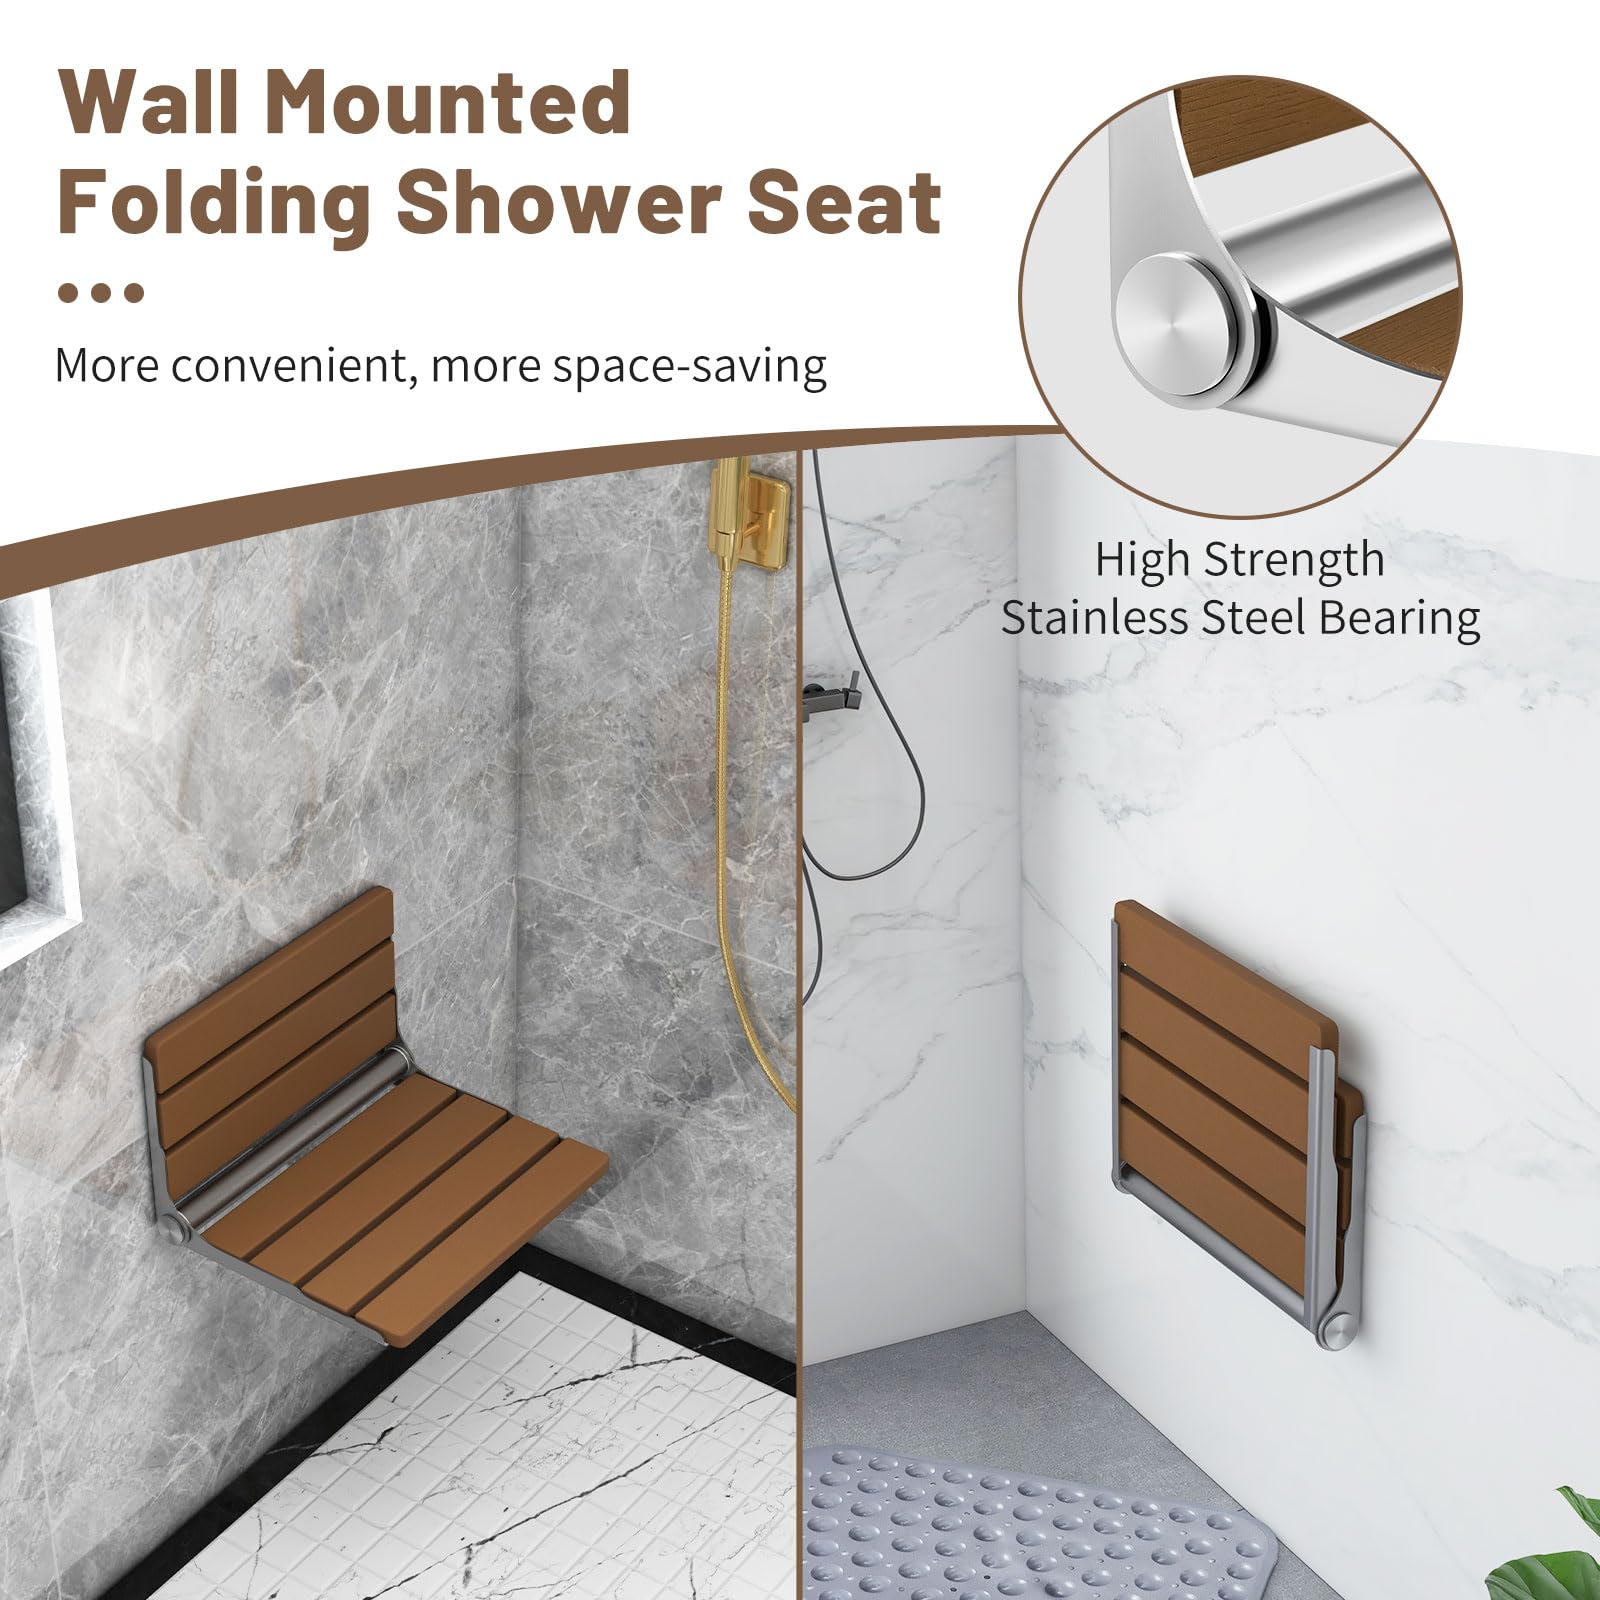  Folding Shower Seat Wall Mounted - Giantex